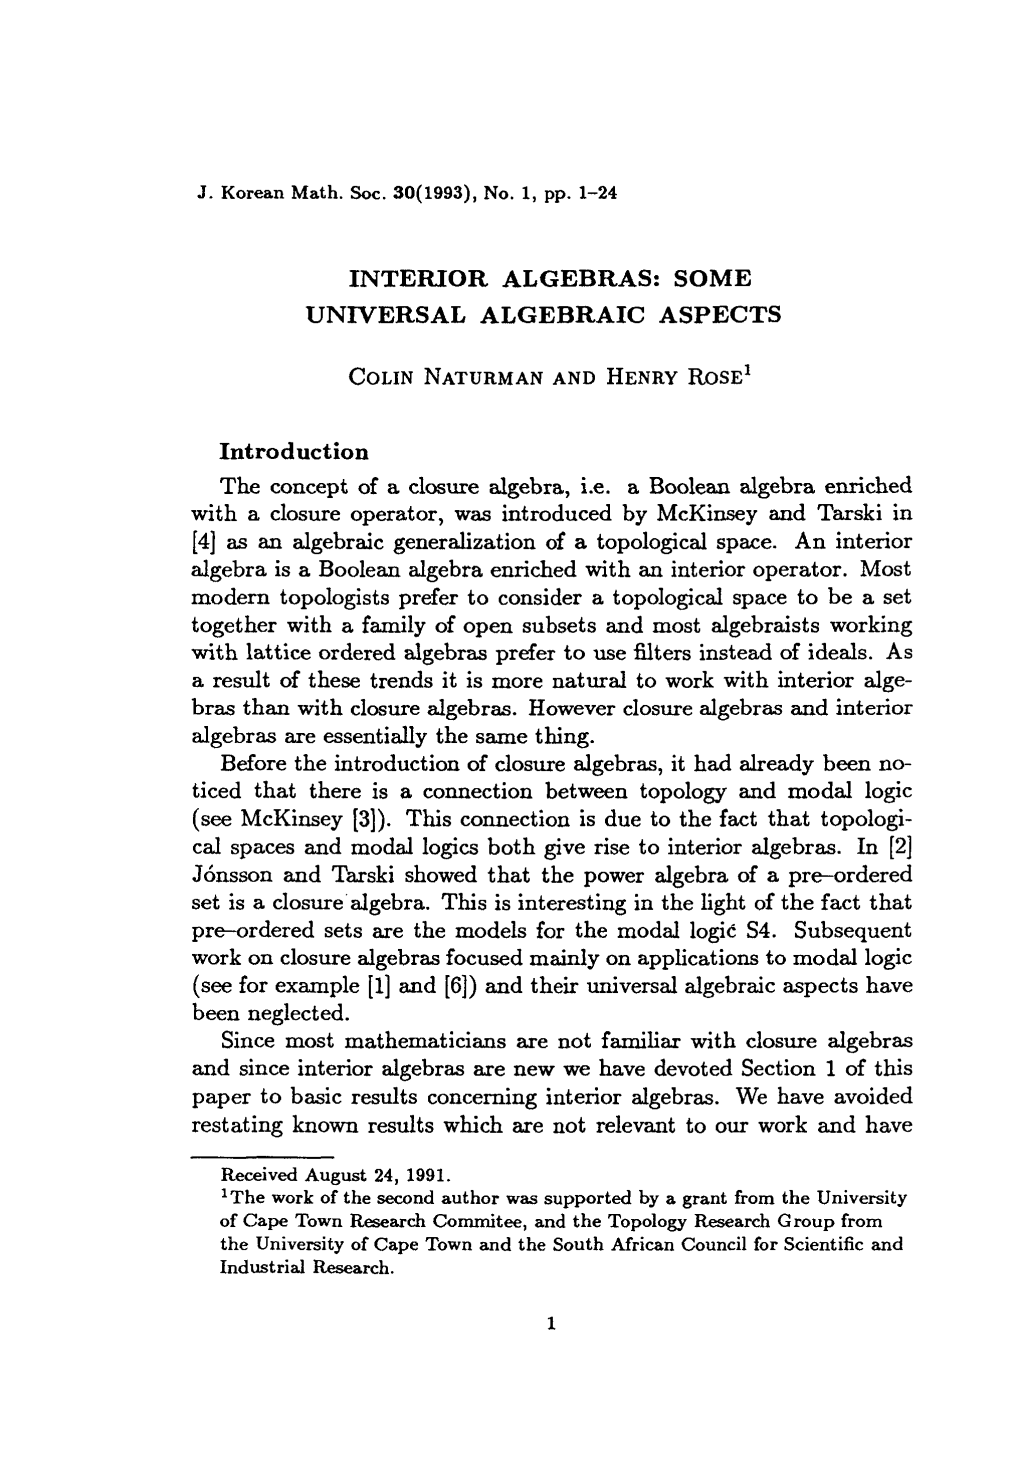 Interior Algebras: Some Universal Algebraic Aspects